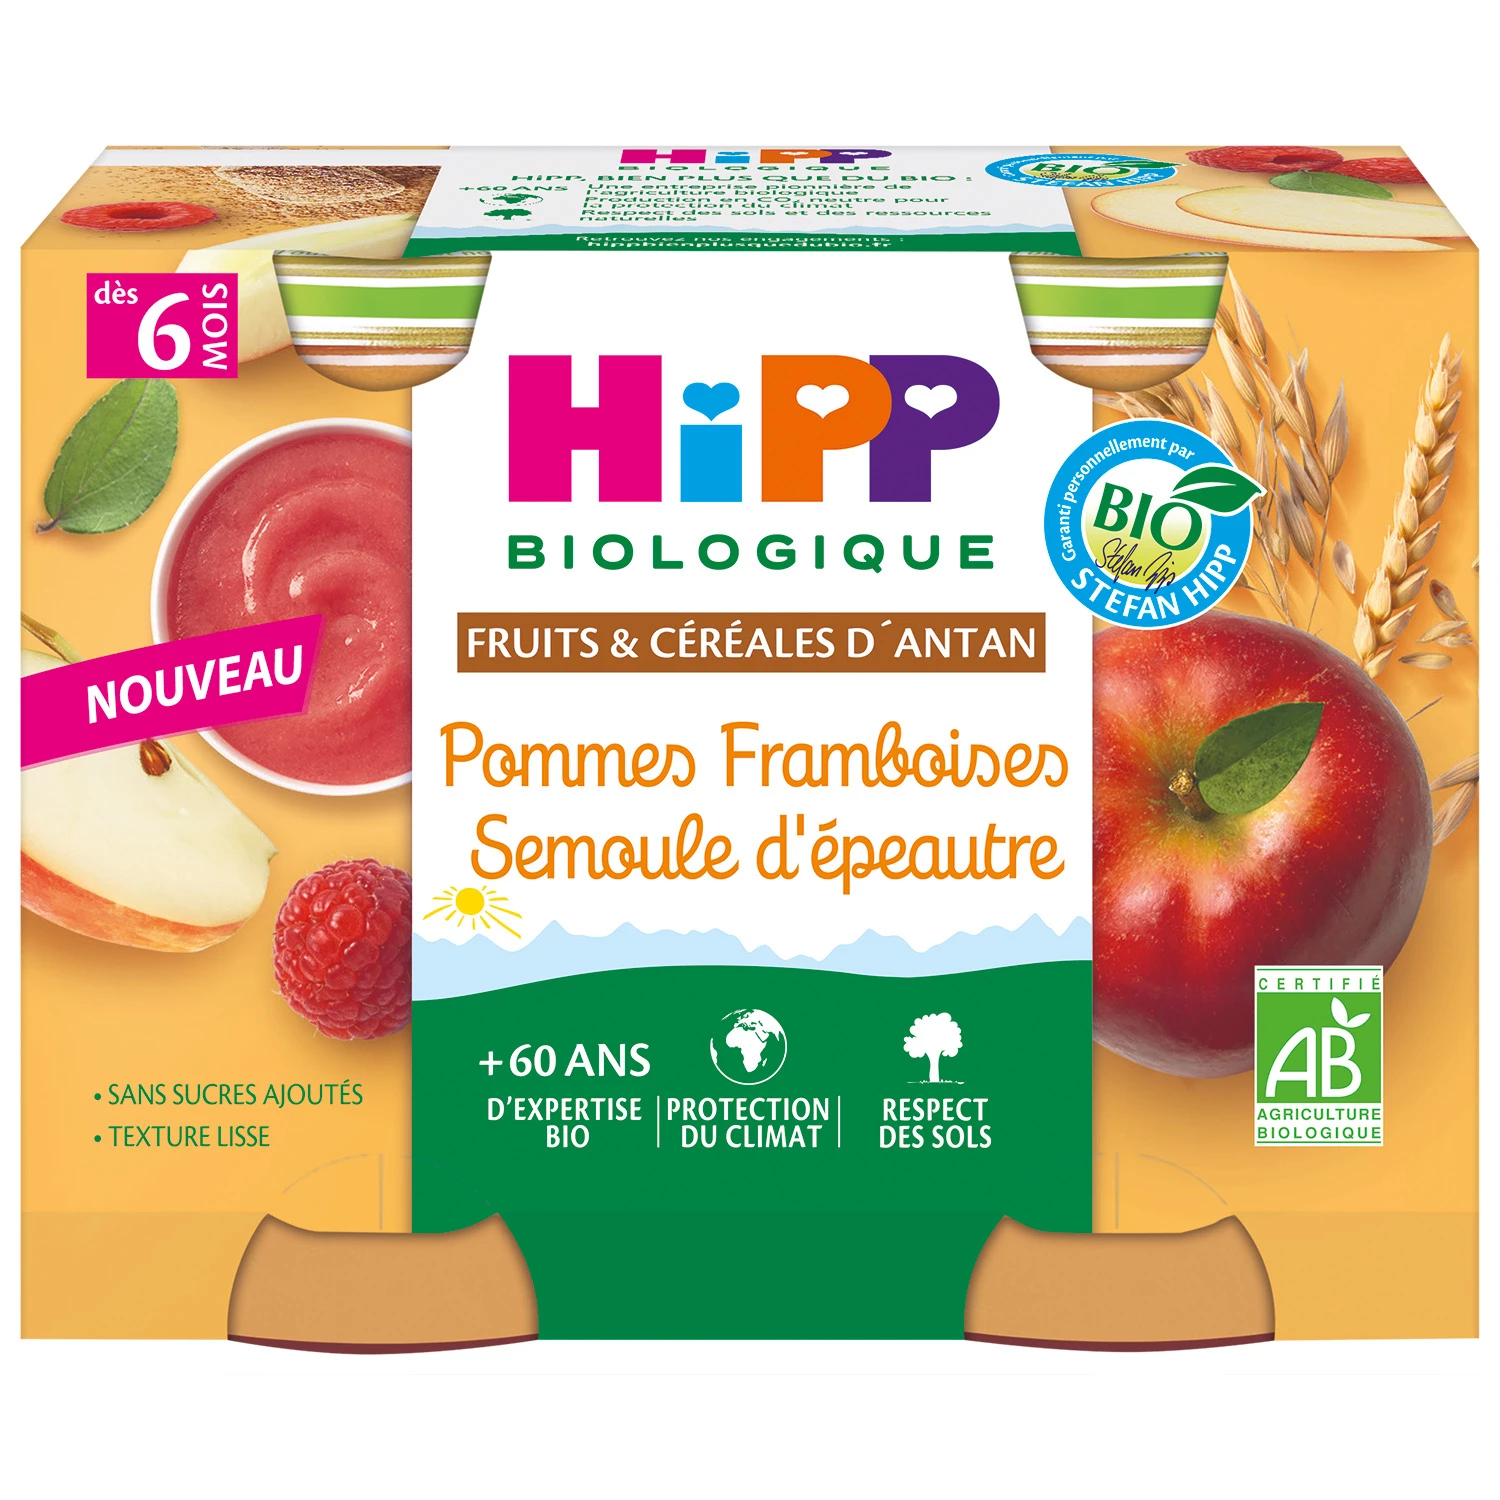 Small jar of Apples, Raspberries and organic spelled semolina, 2x190g, HIPP BioLOGIQUE